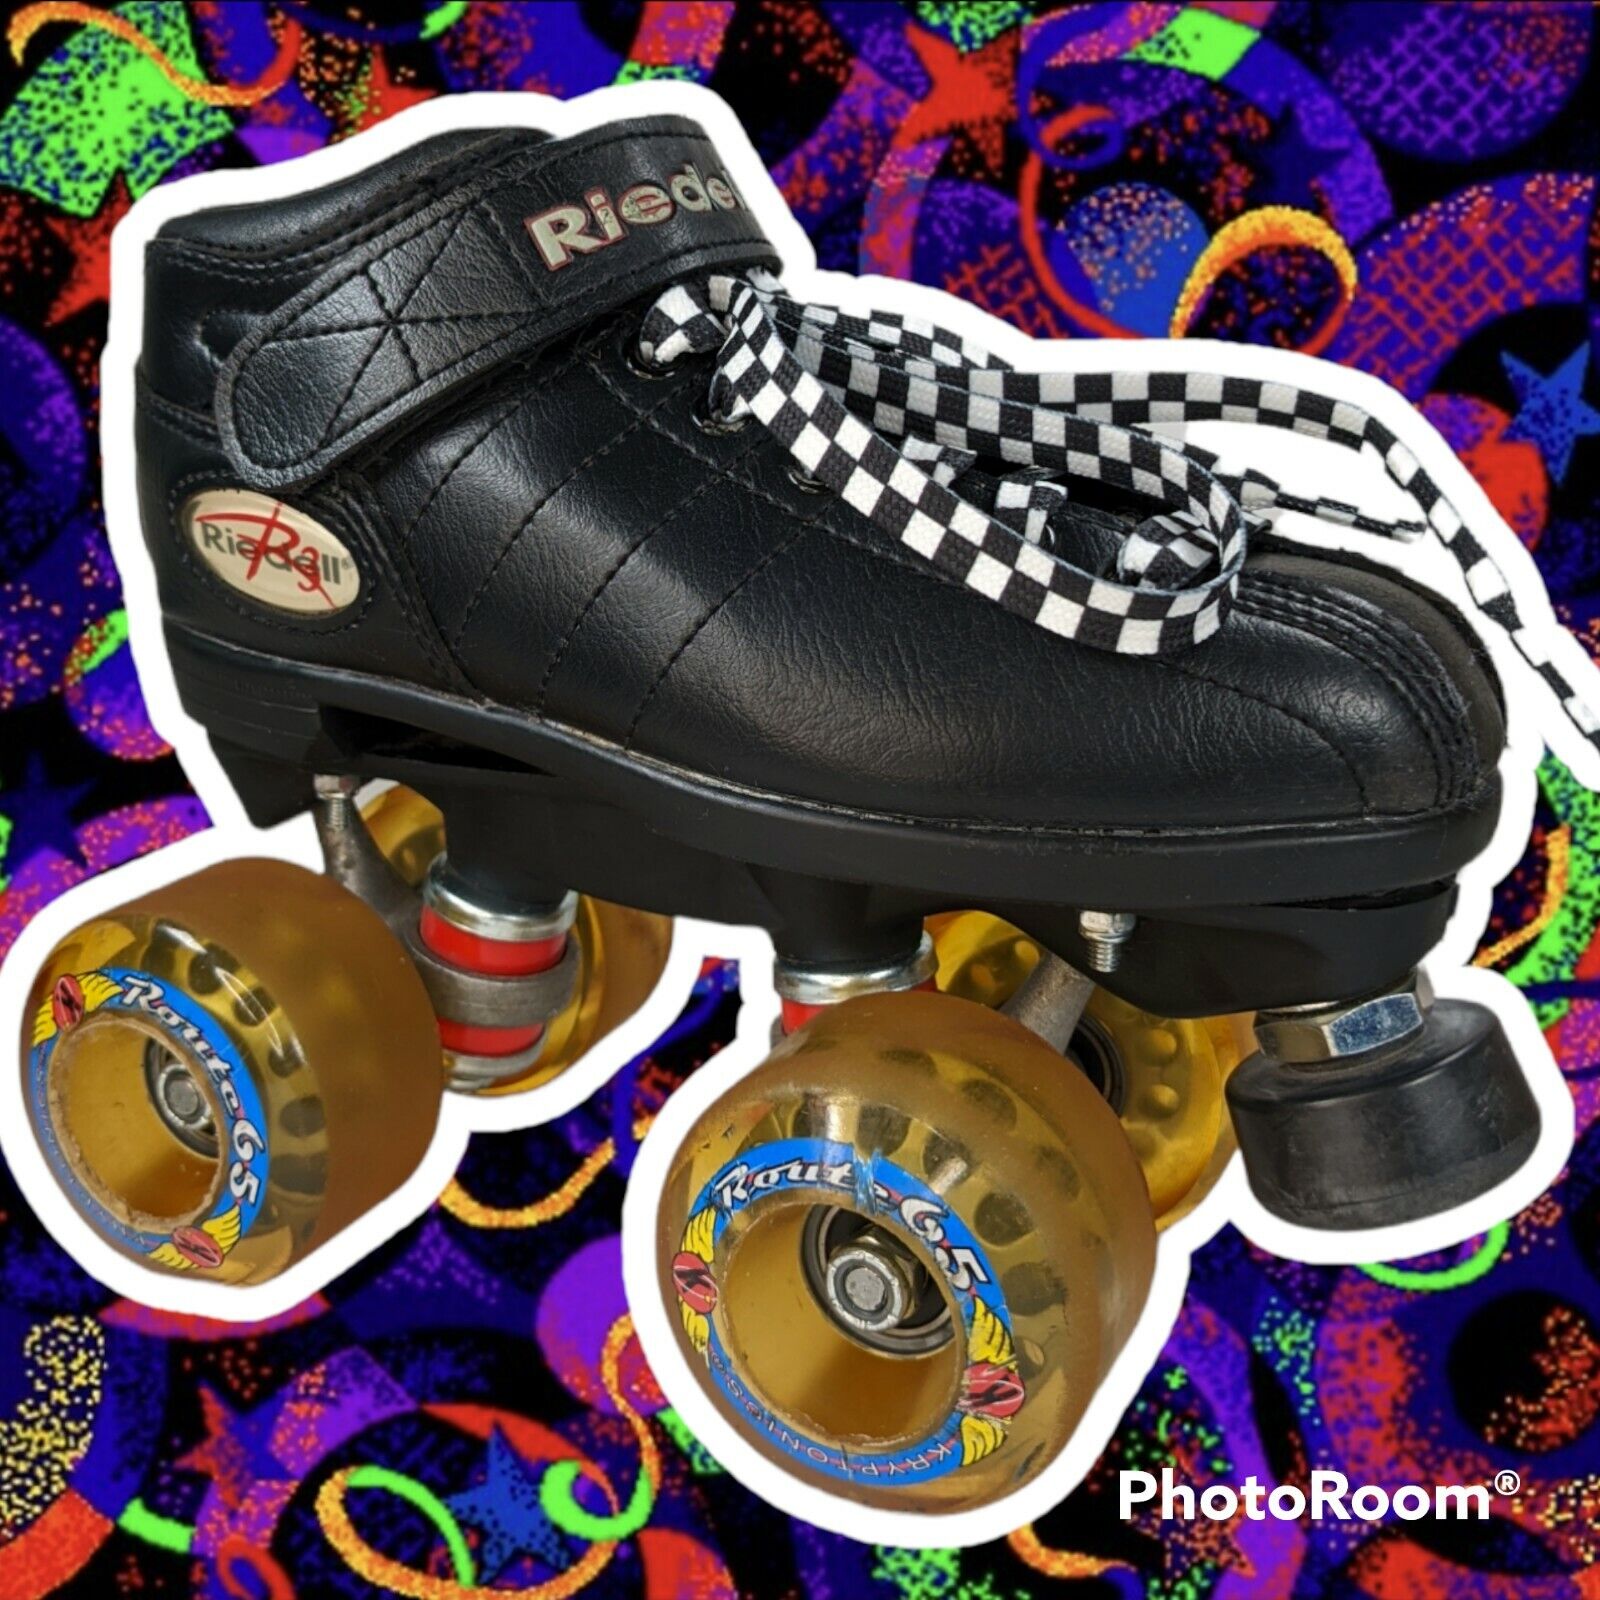 Riedell R3 CAYMAN Roller Derby Speed Skates Size 2 Black Quad